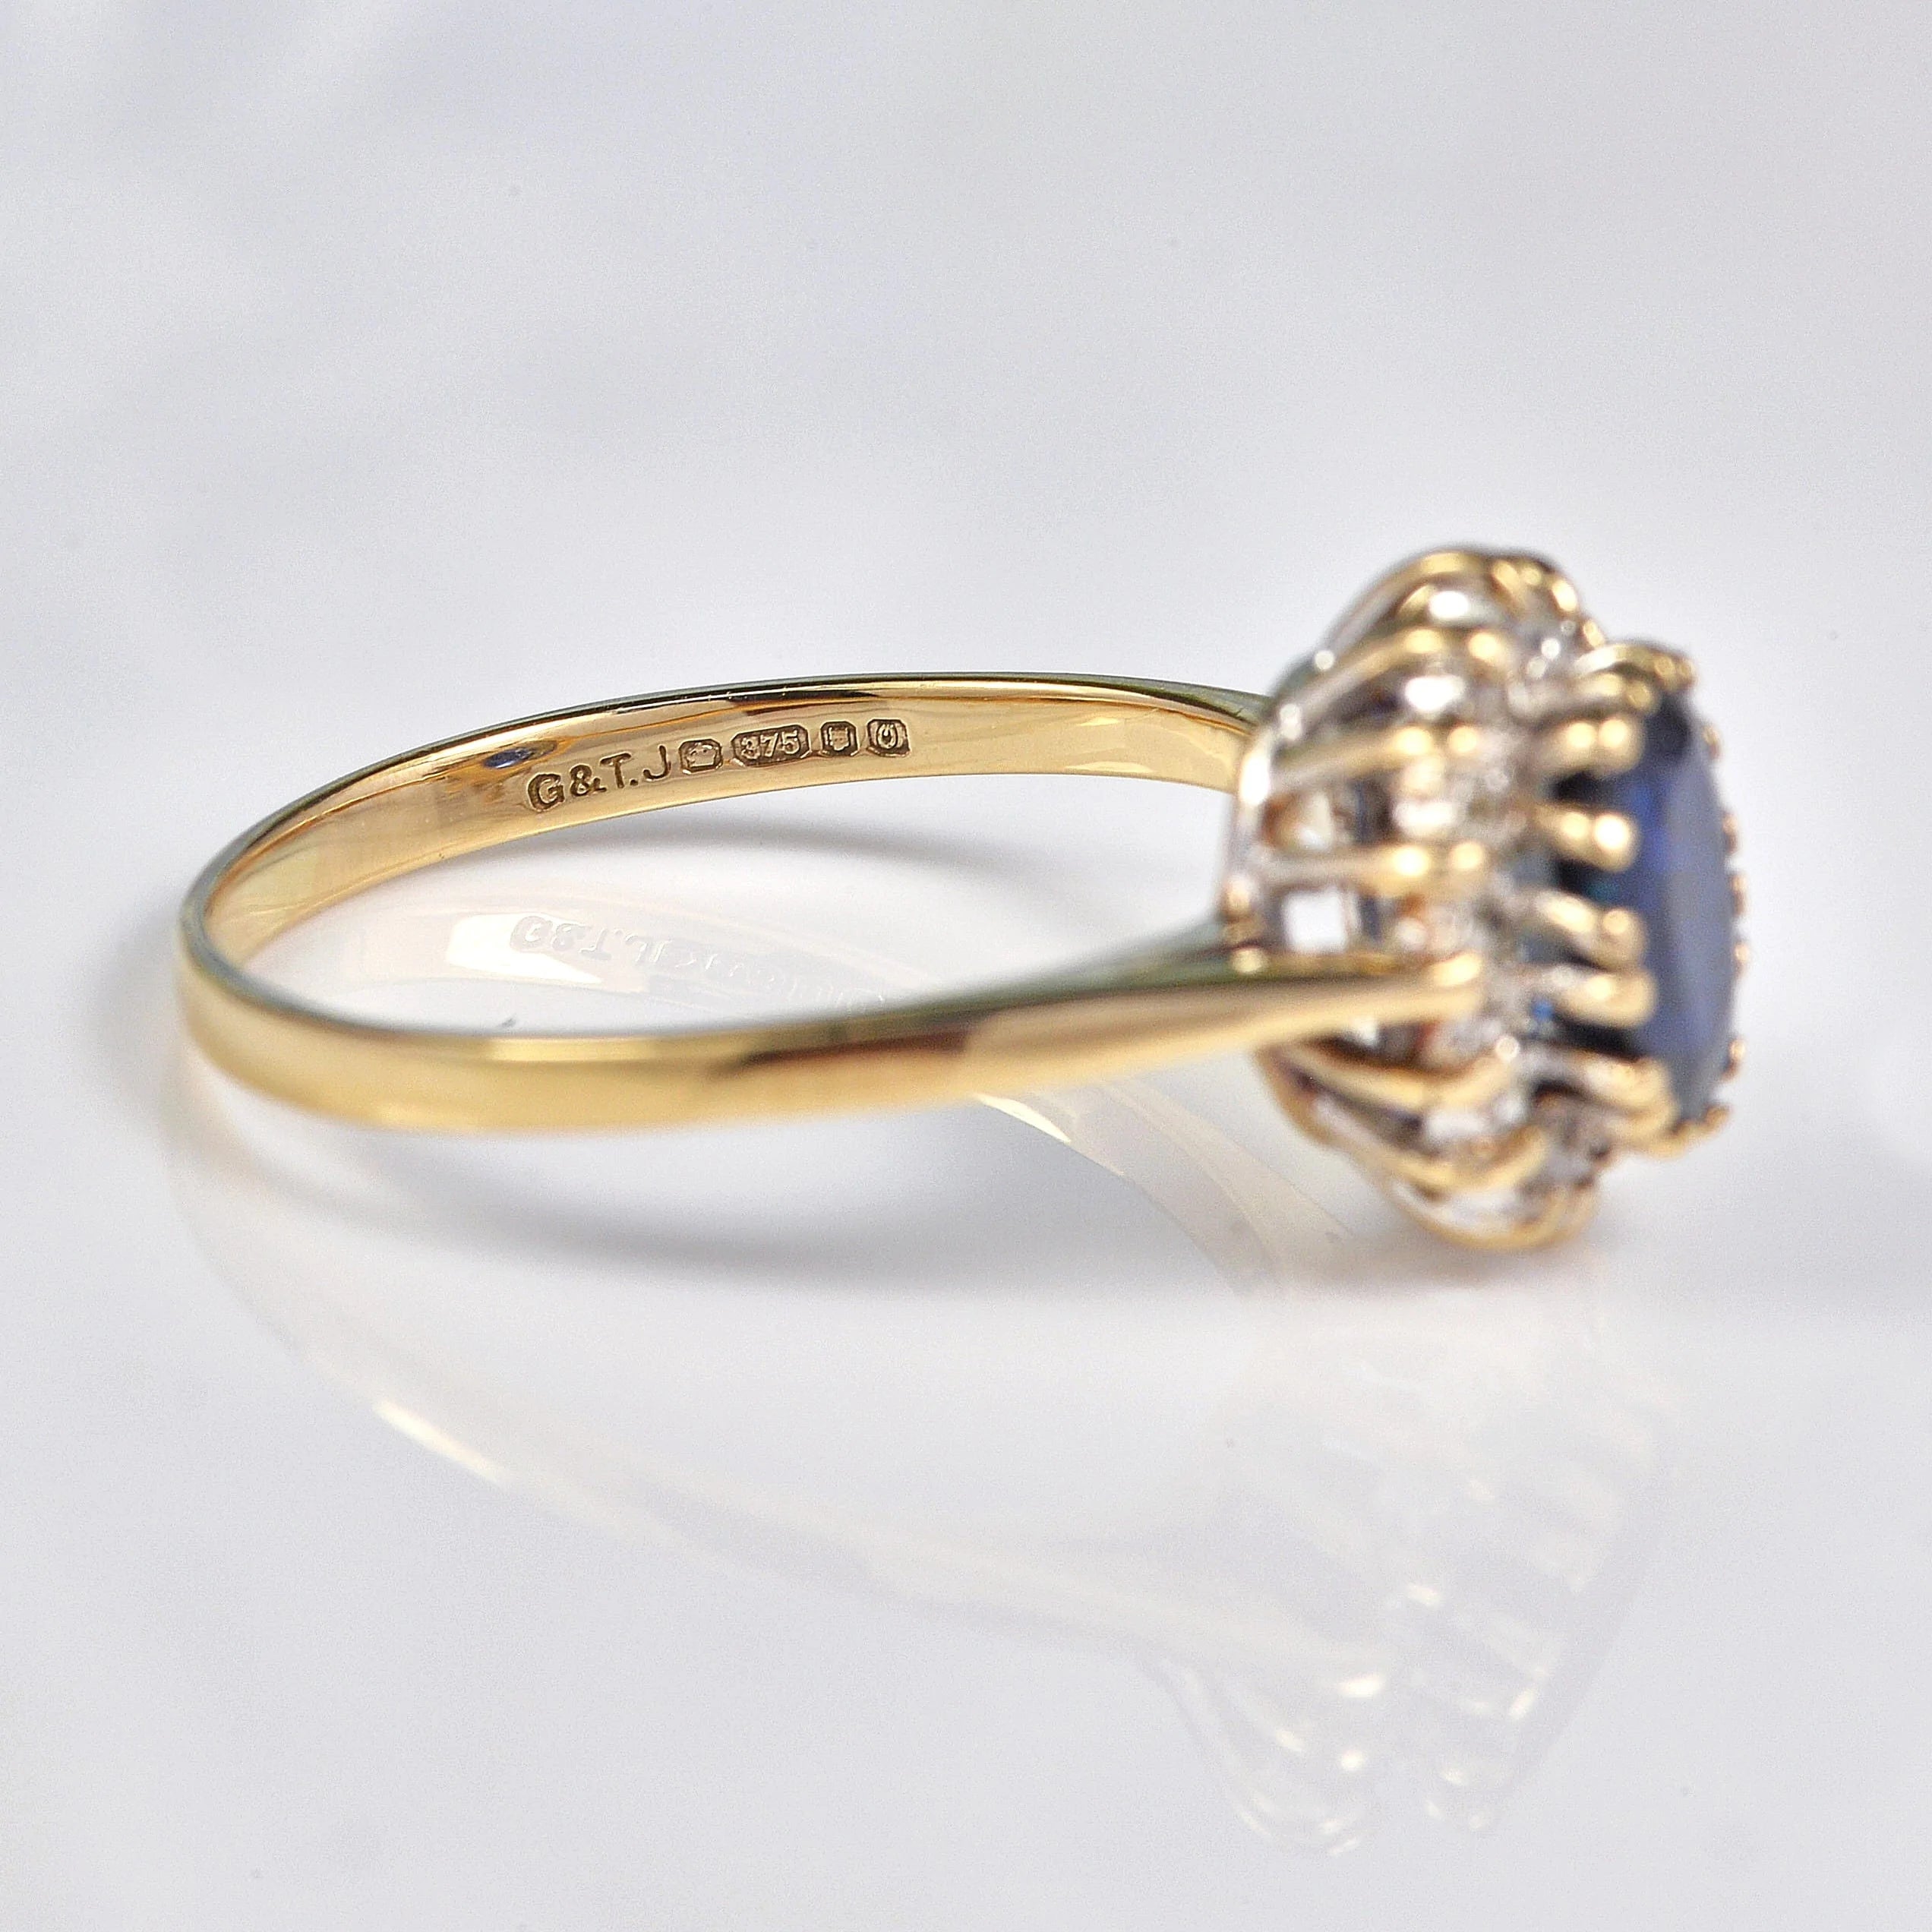 Ellibelle Jewellery Vintage 1980s Sapphire & Diamond Cluster Ring